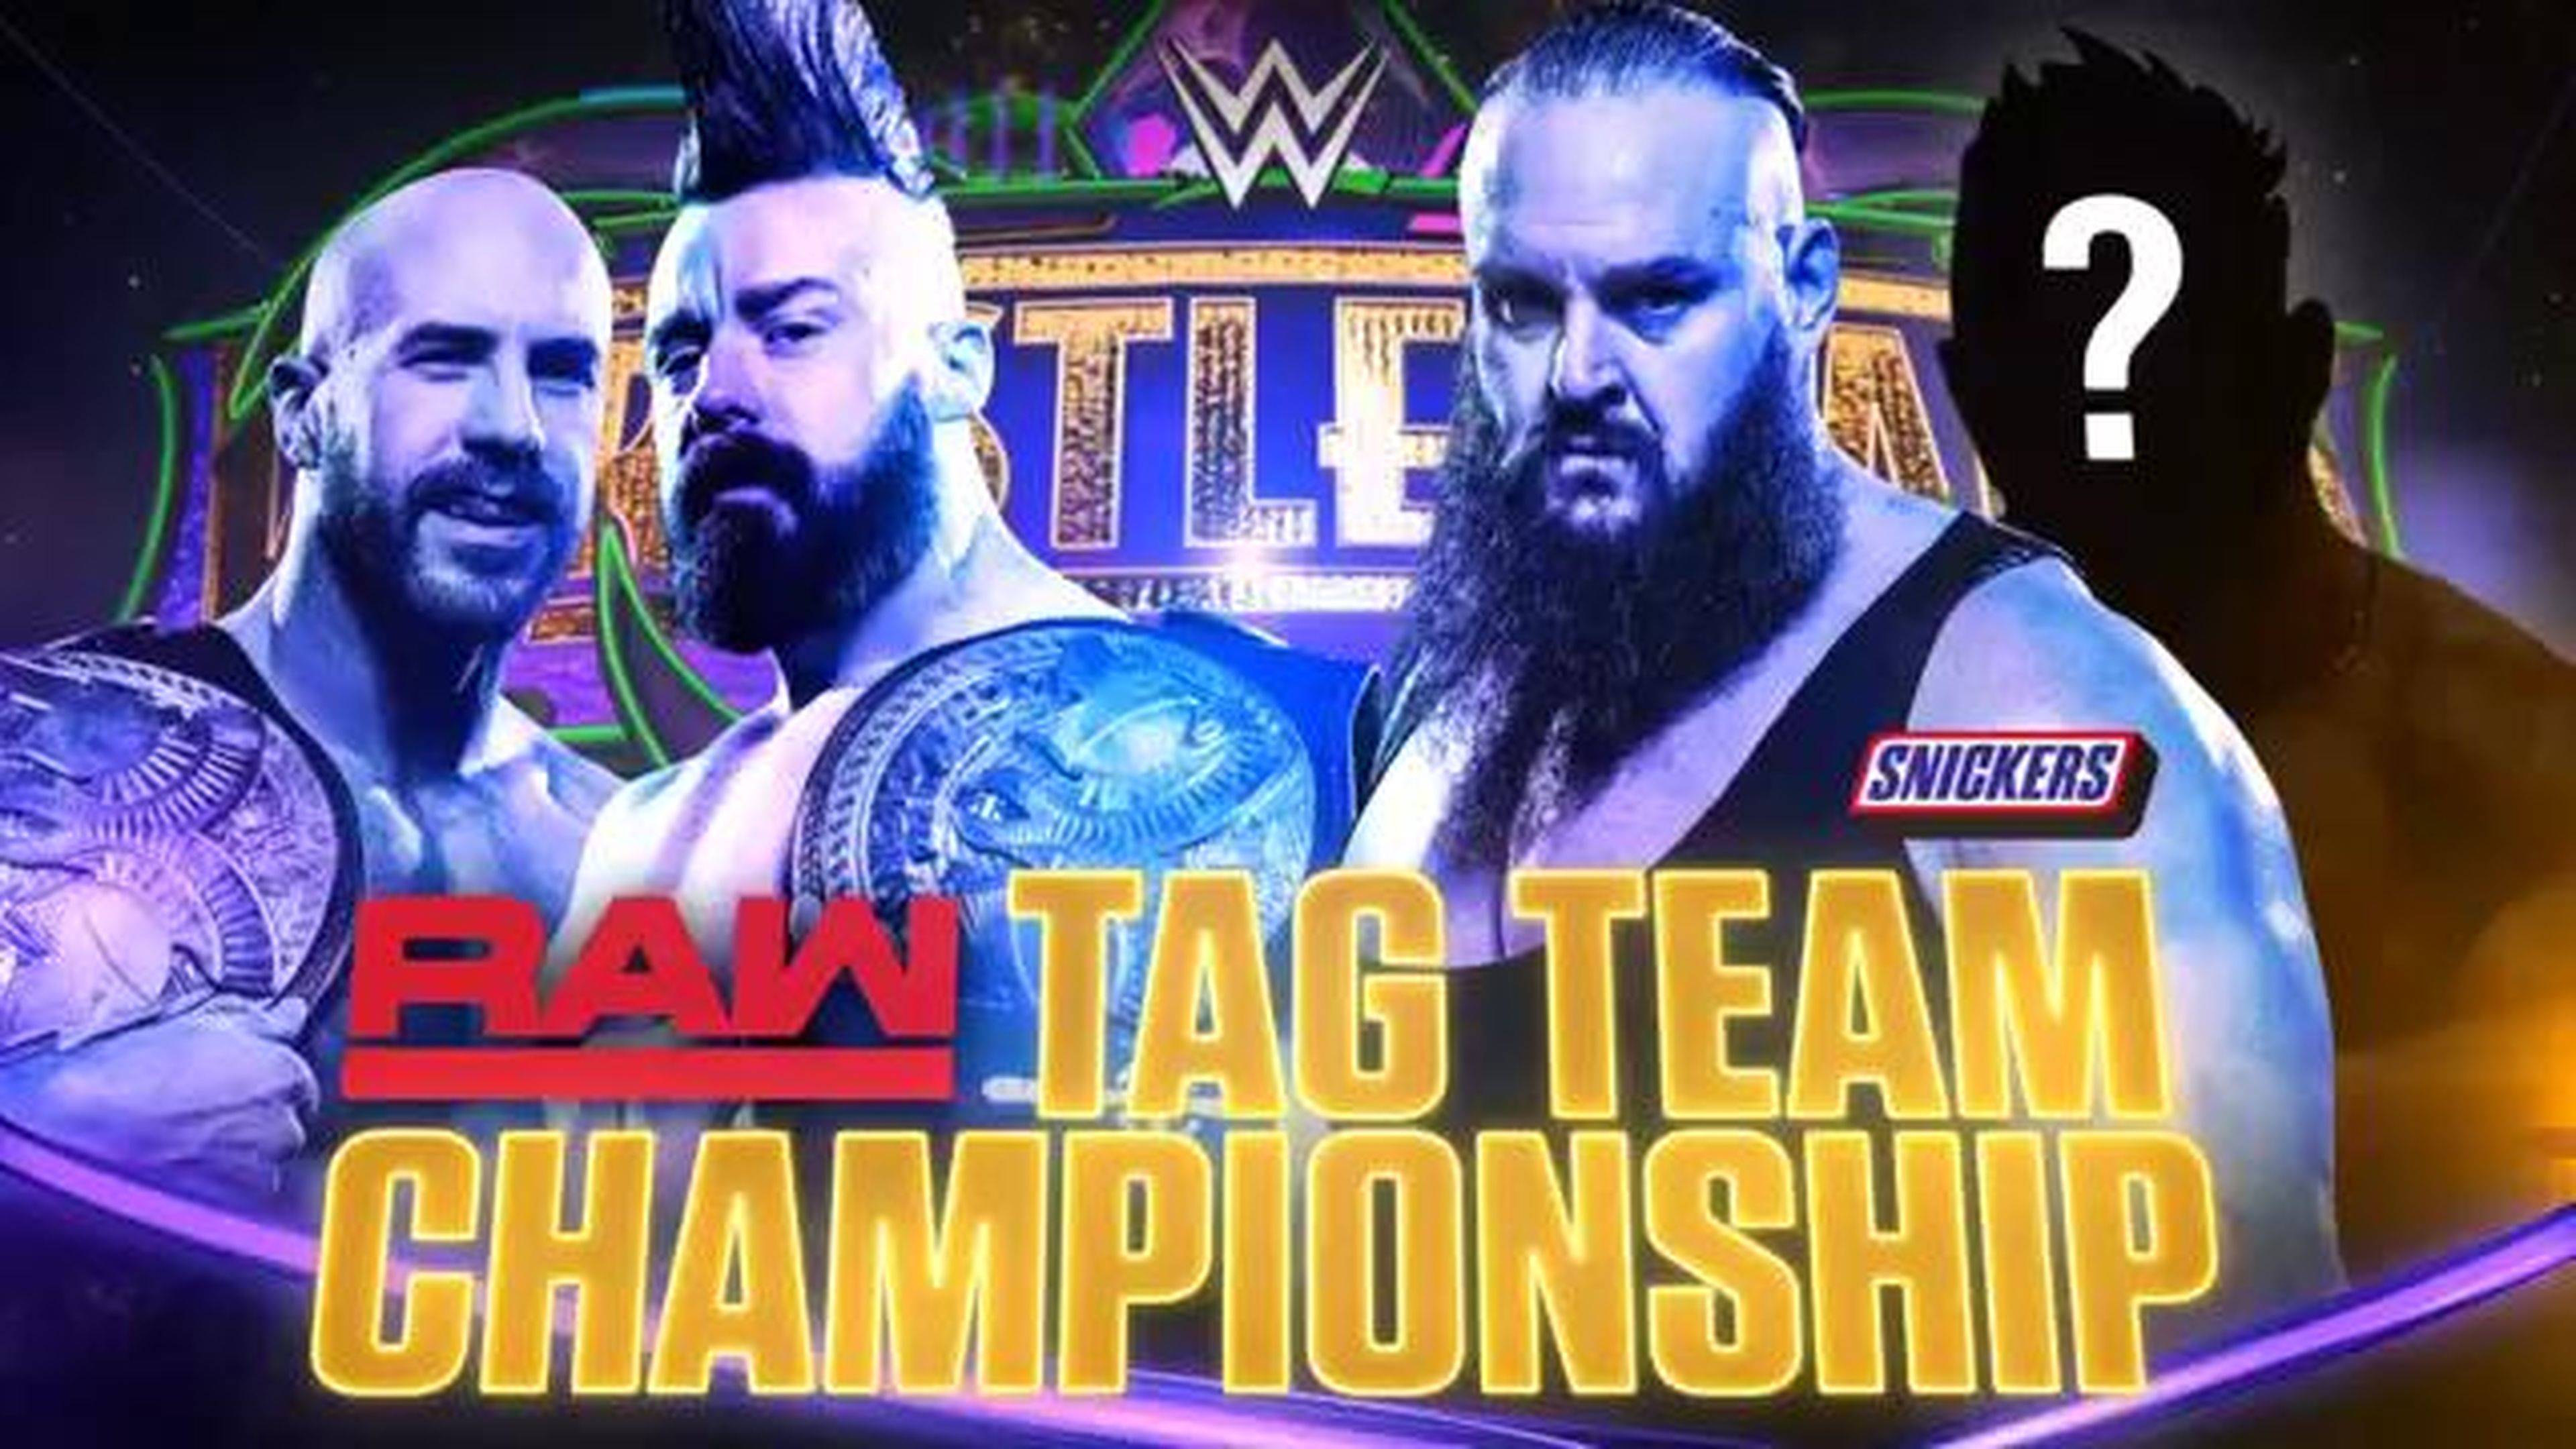 WWE WrestleMania 34 - Camponato por Equipos de Raw - The Bar vs. Braun Strowman